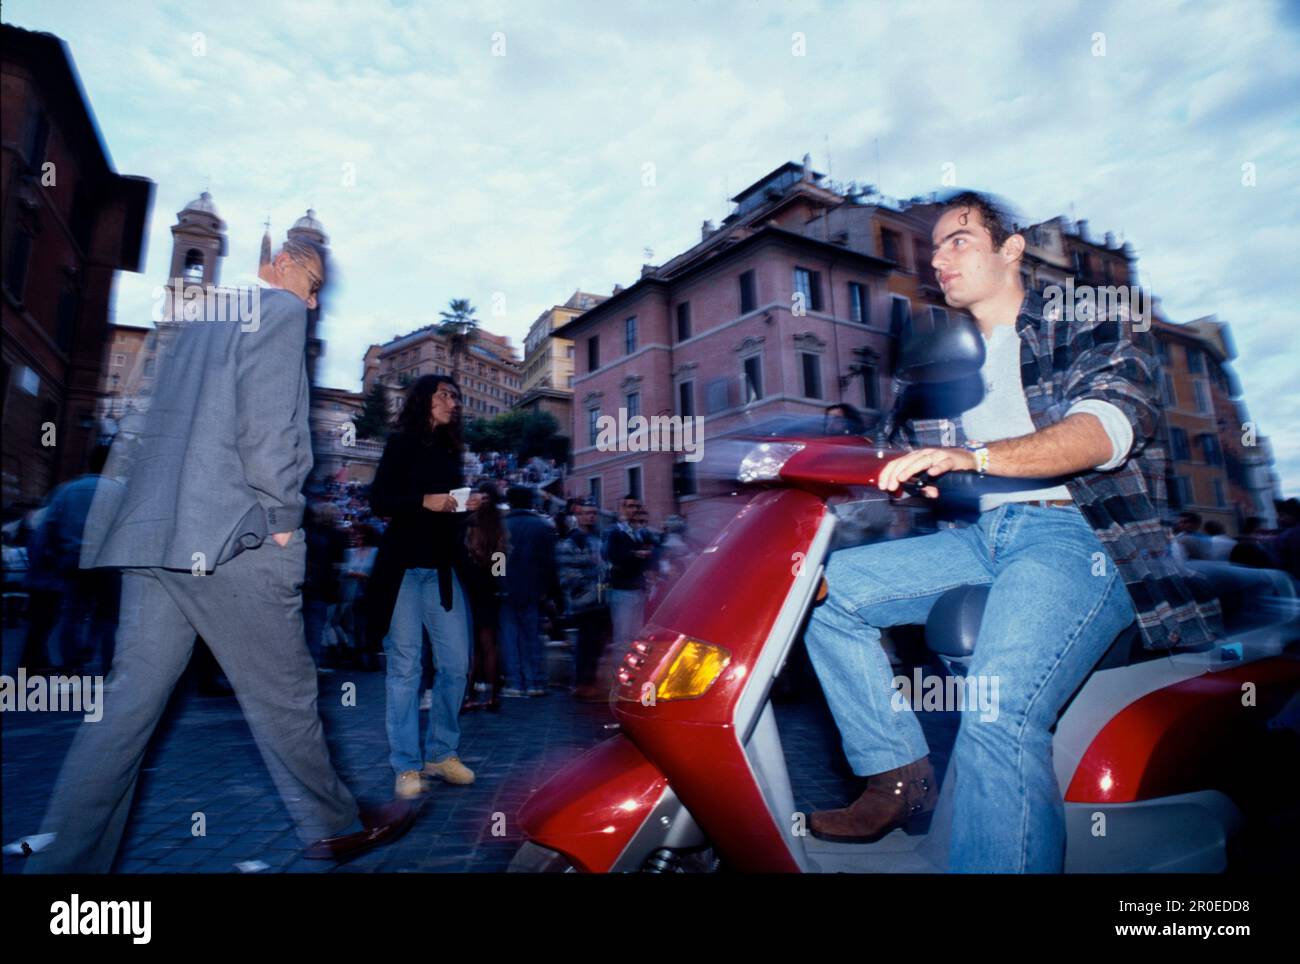 Vespafahrer, Piazza d'Espagna, Rom Latium, Italien Stockfoto